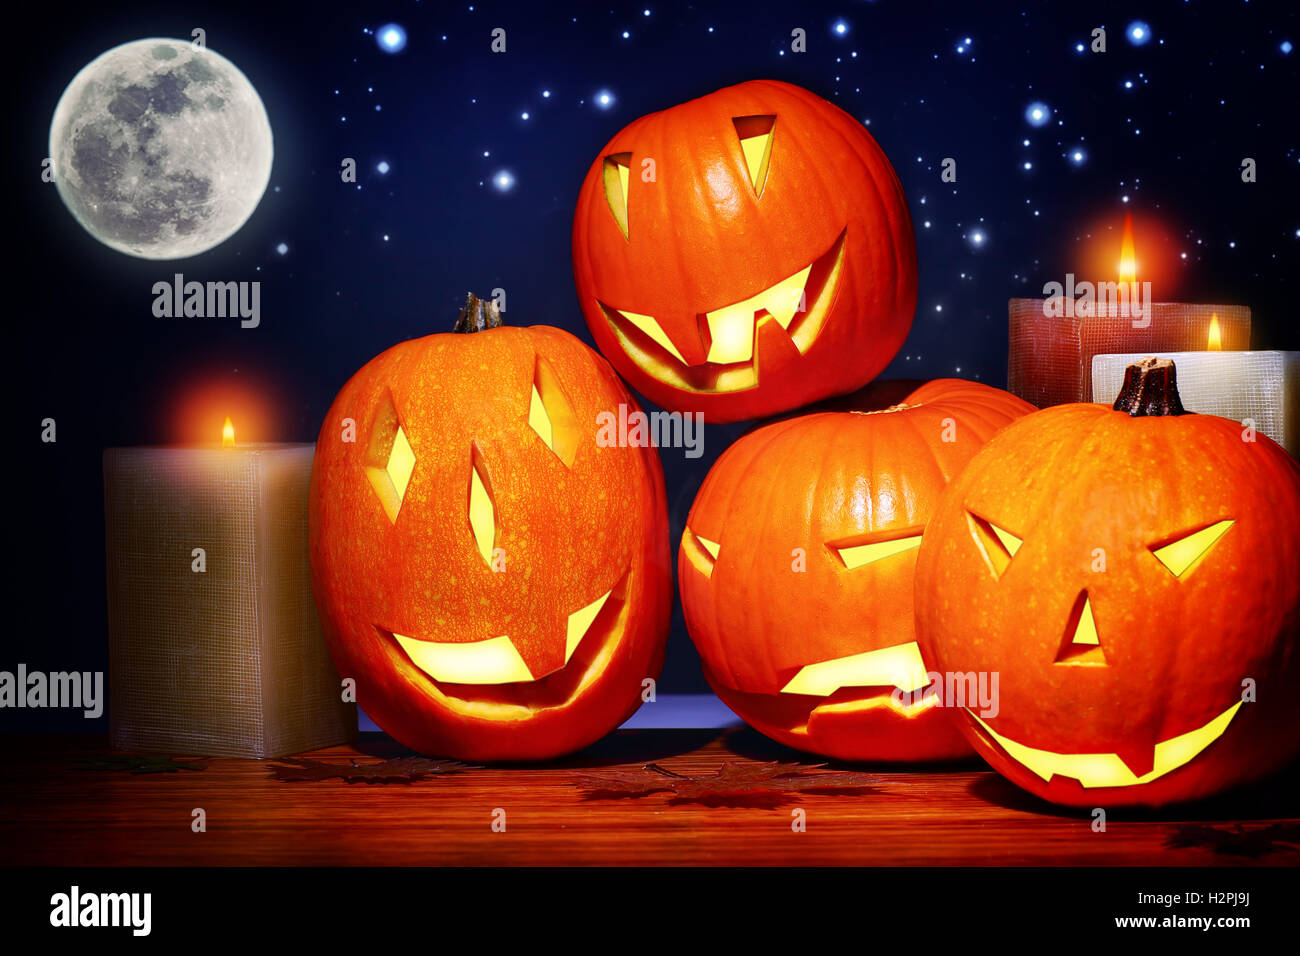 Fiesta de Halloween decoración festiva, terrorífico bodegón sobre fondo de cielo estrellado, calabazas talladas caras como jack-o-lantern Foto de stock